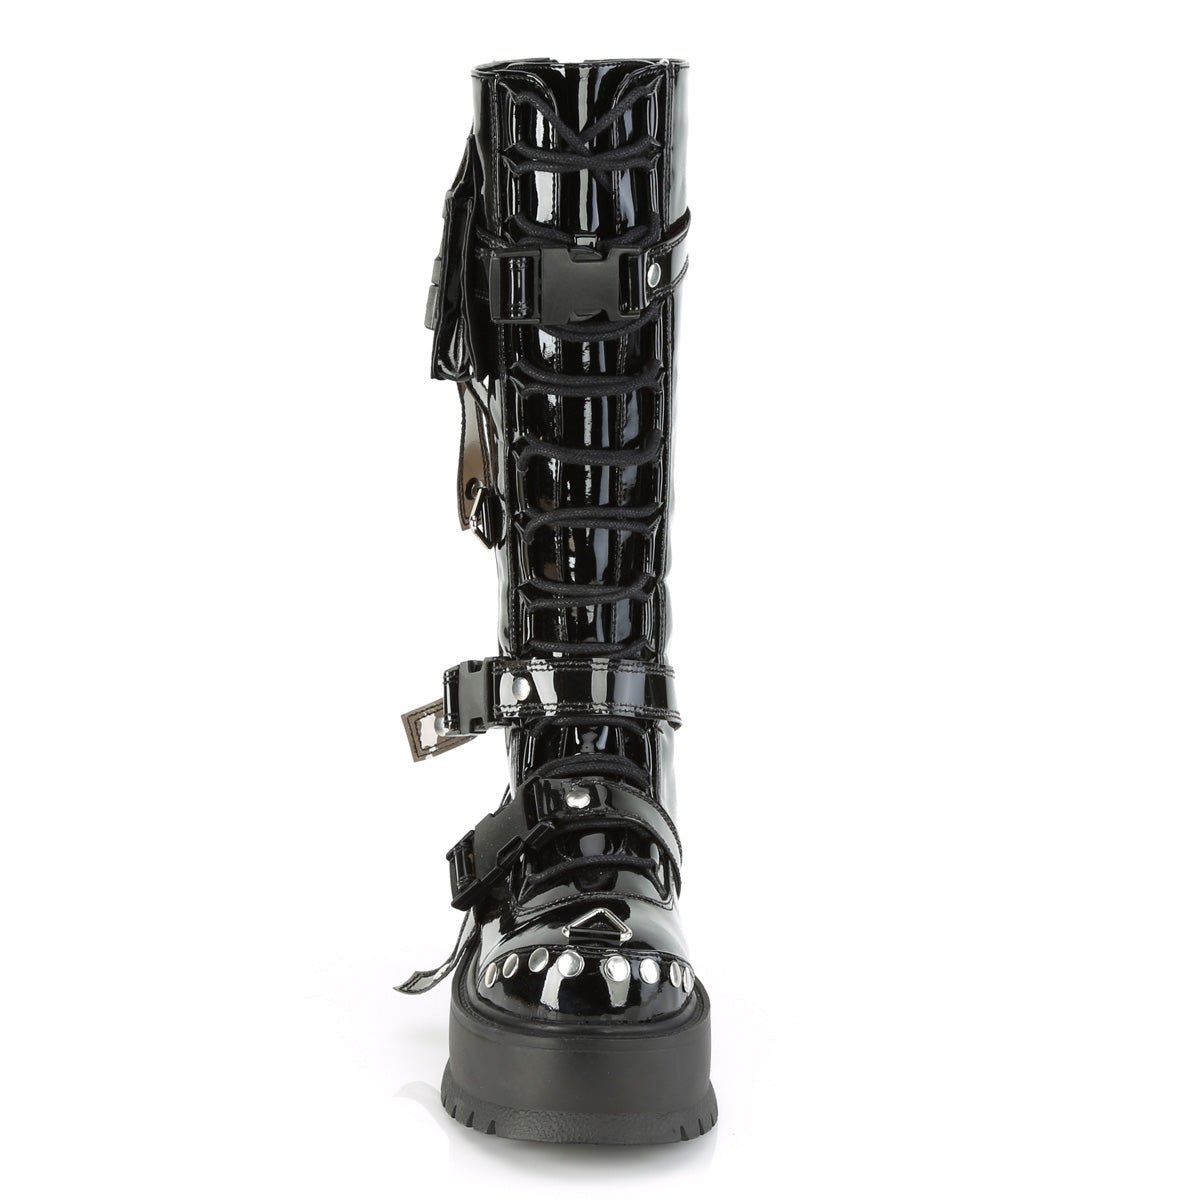 Too Fast | Demonia Slacker 260 | Black Patent Leather Women's Knee High Boots